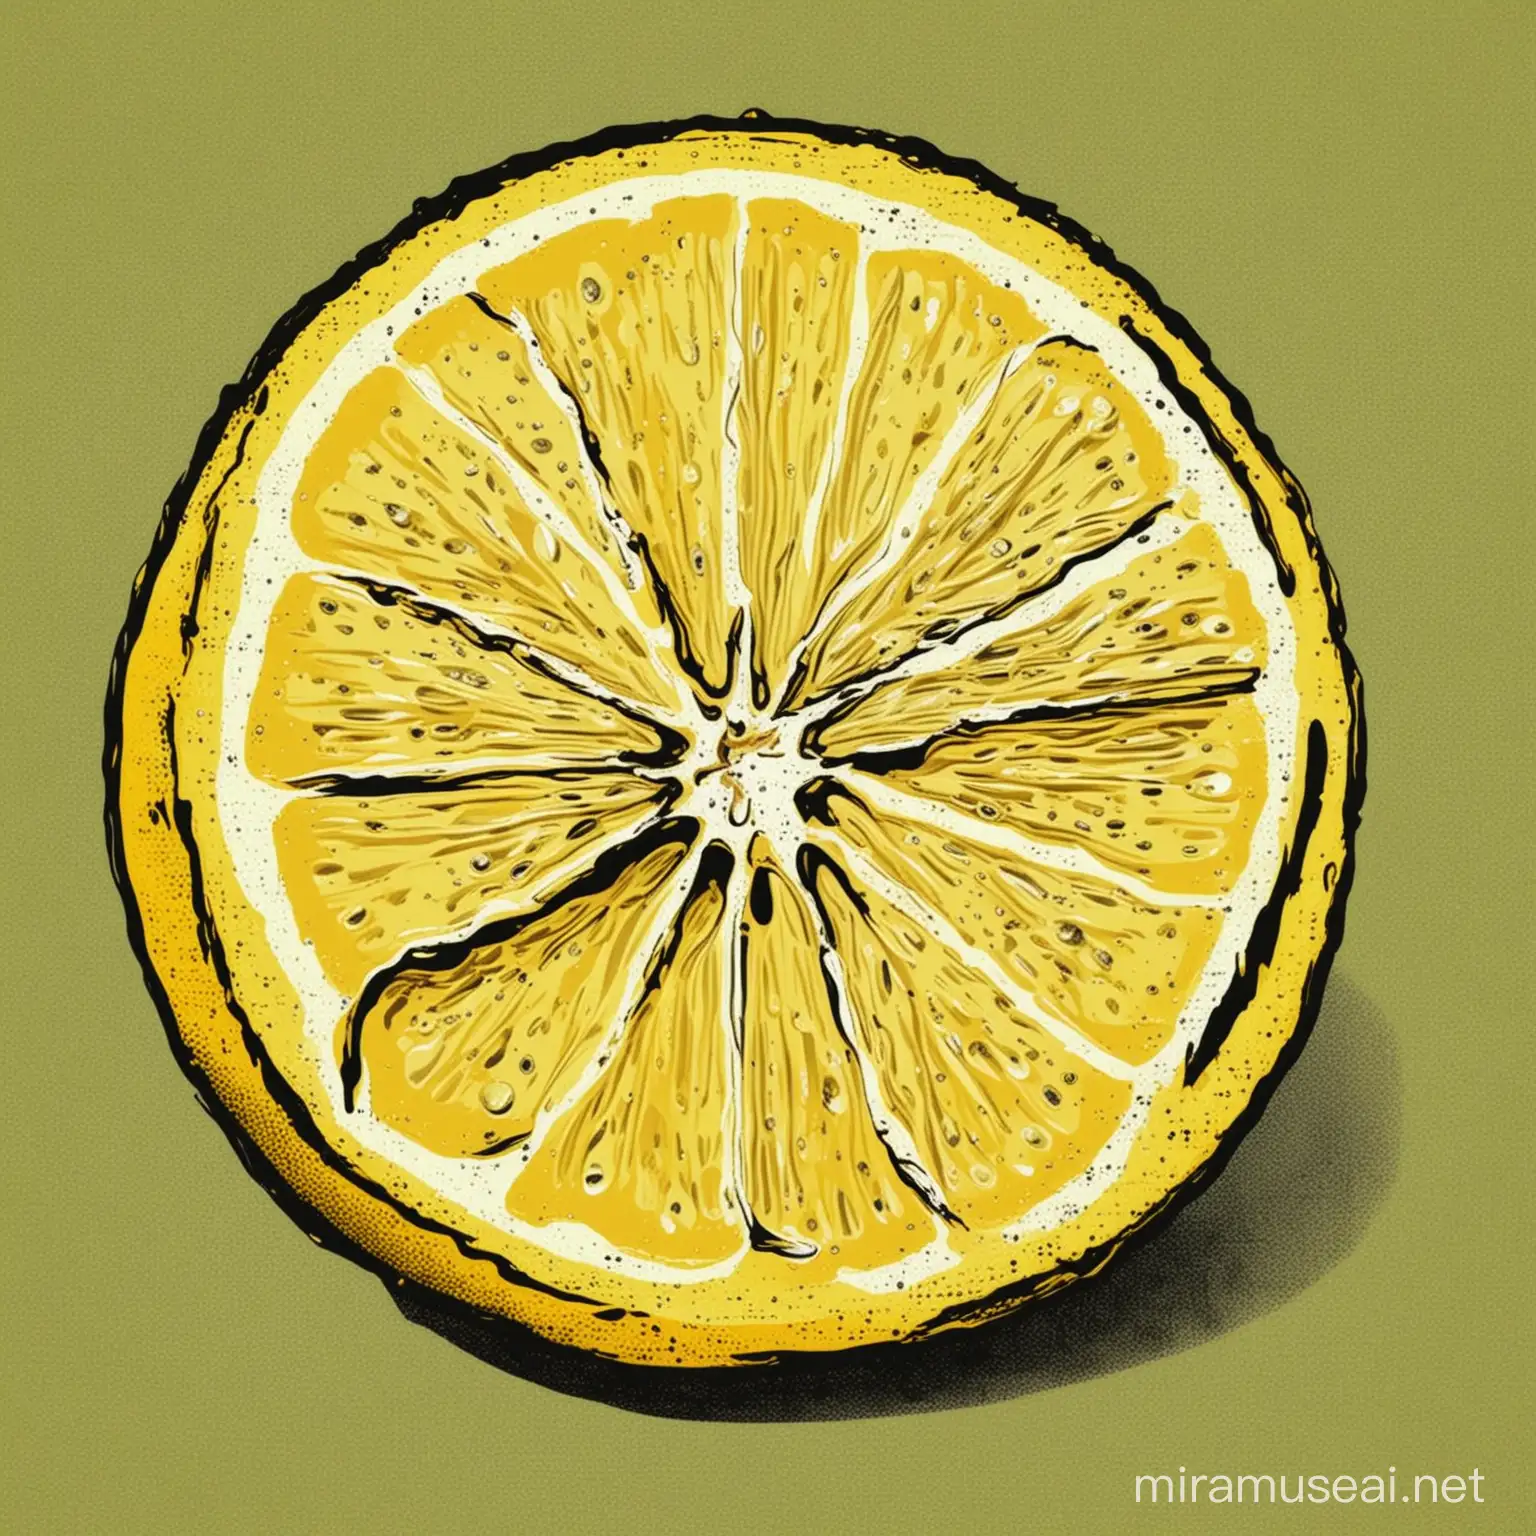 Vibrant Pop Art Lemon on Colorful Background